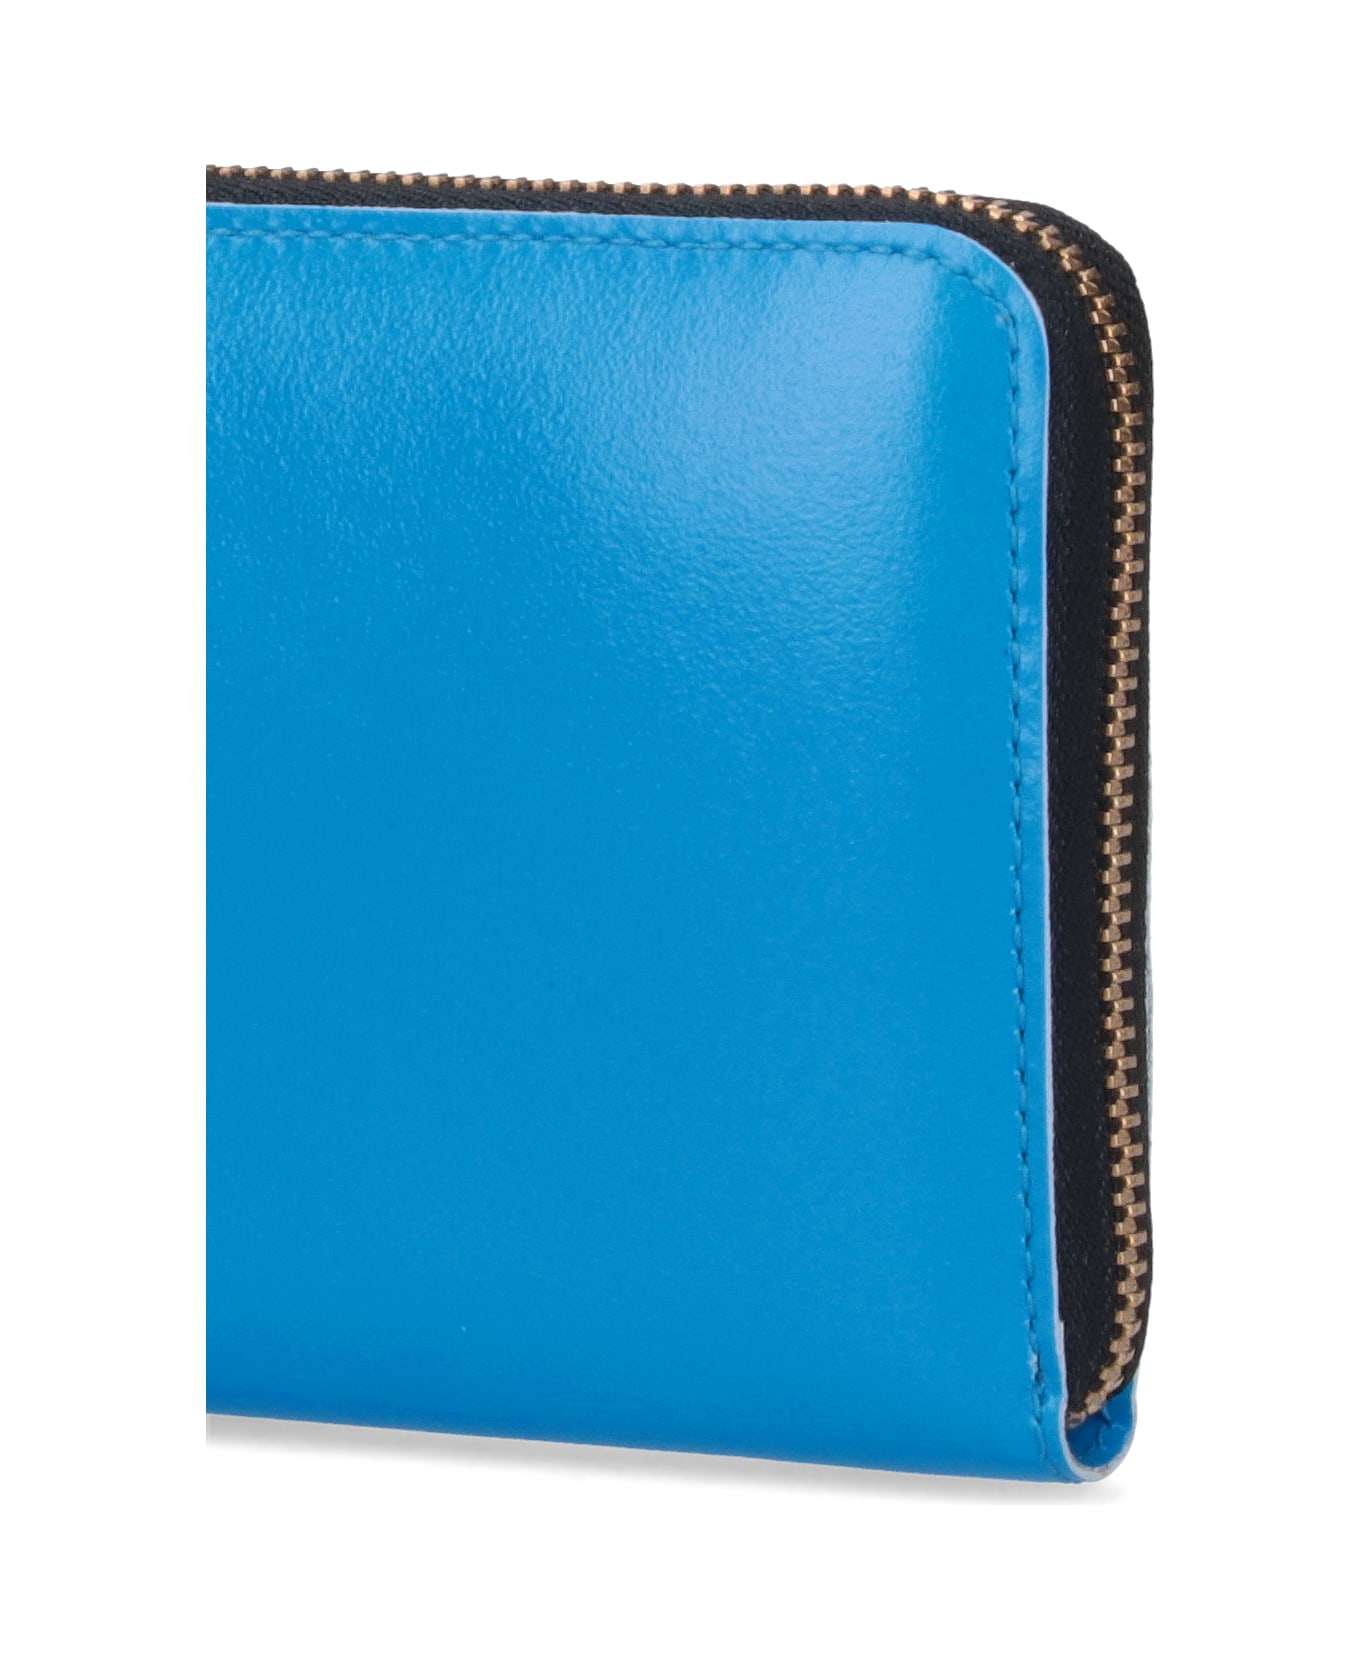 Comme des Garçons Wallet Super Fluo Zipper Wallet - Blue